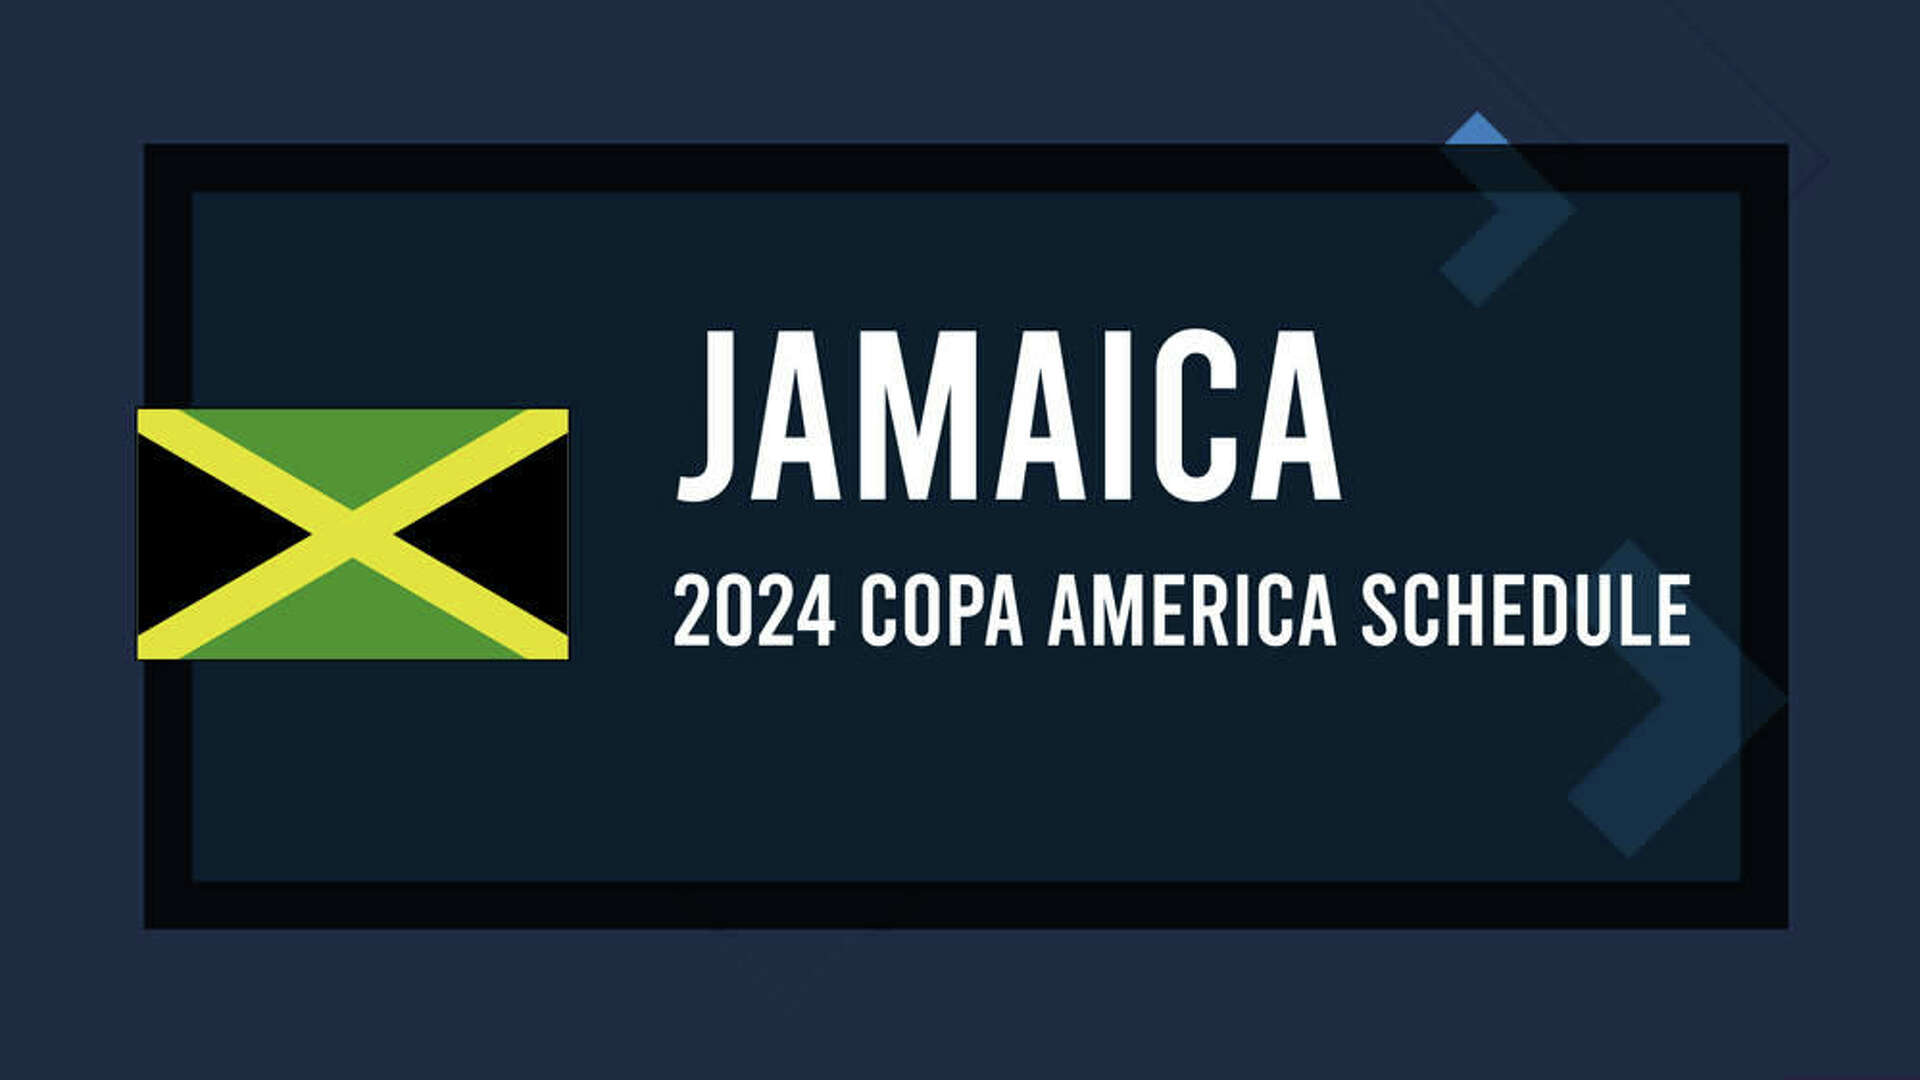 Copa America 2024 Jamaica Schedule, Start Times and Game Info